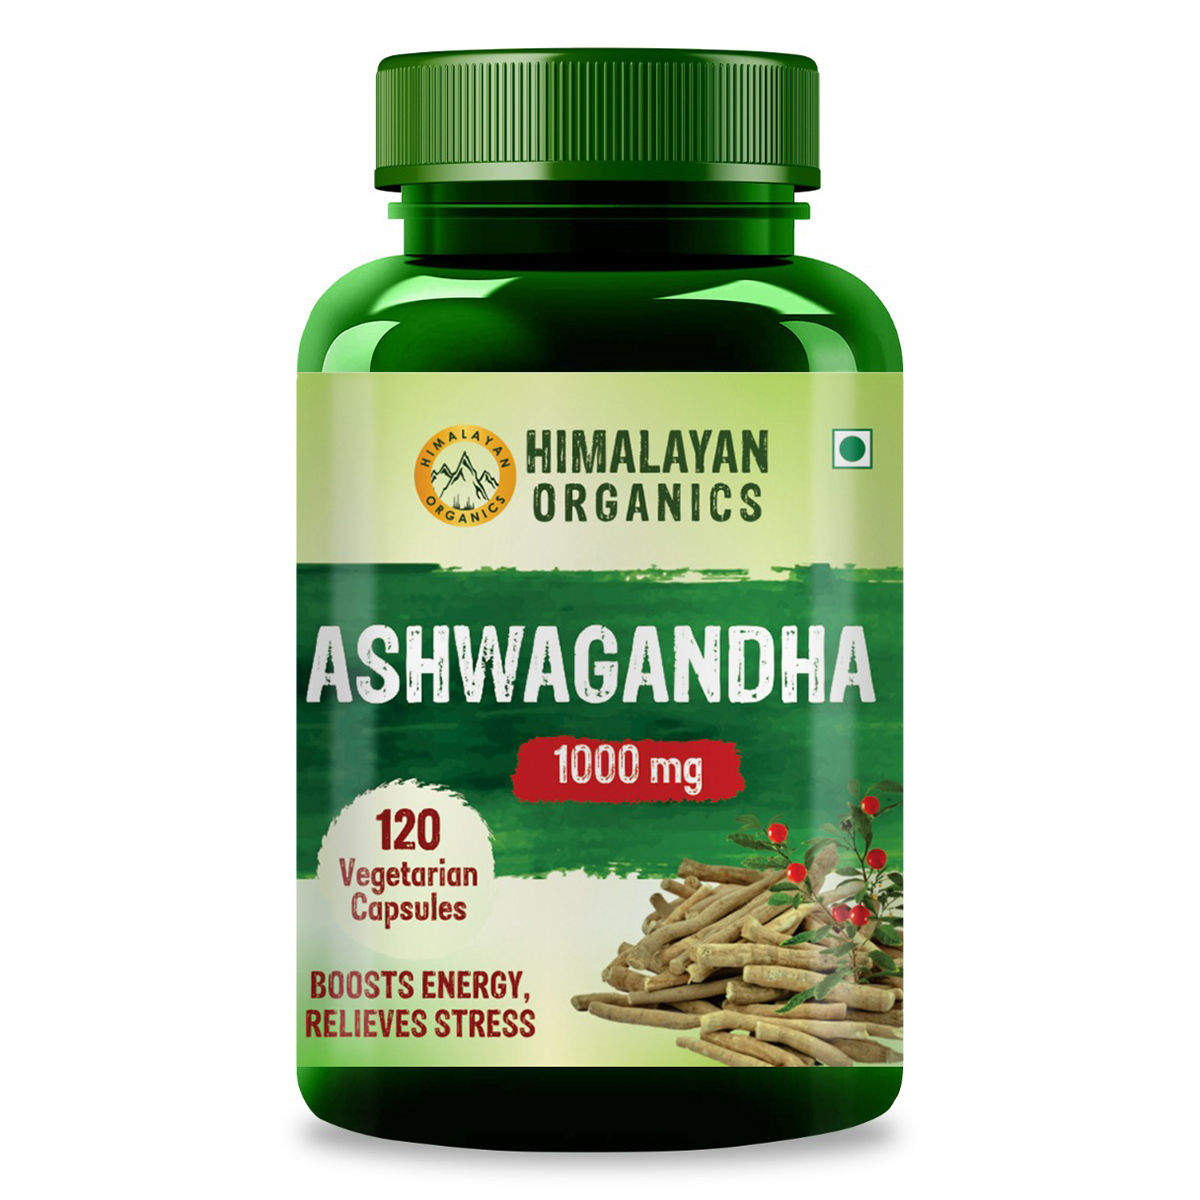 Buy Himalayan Organics Ashwagandha 1000 mg, 120 Capsules Online